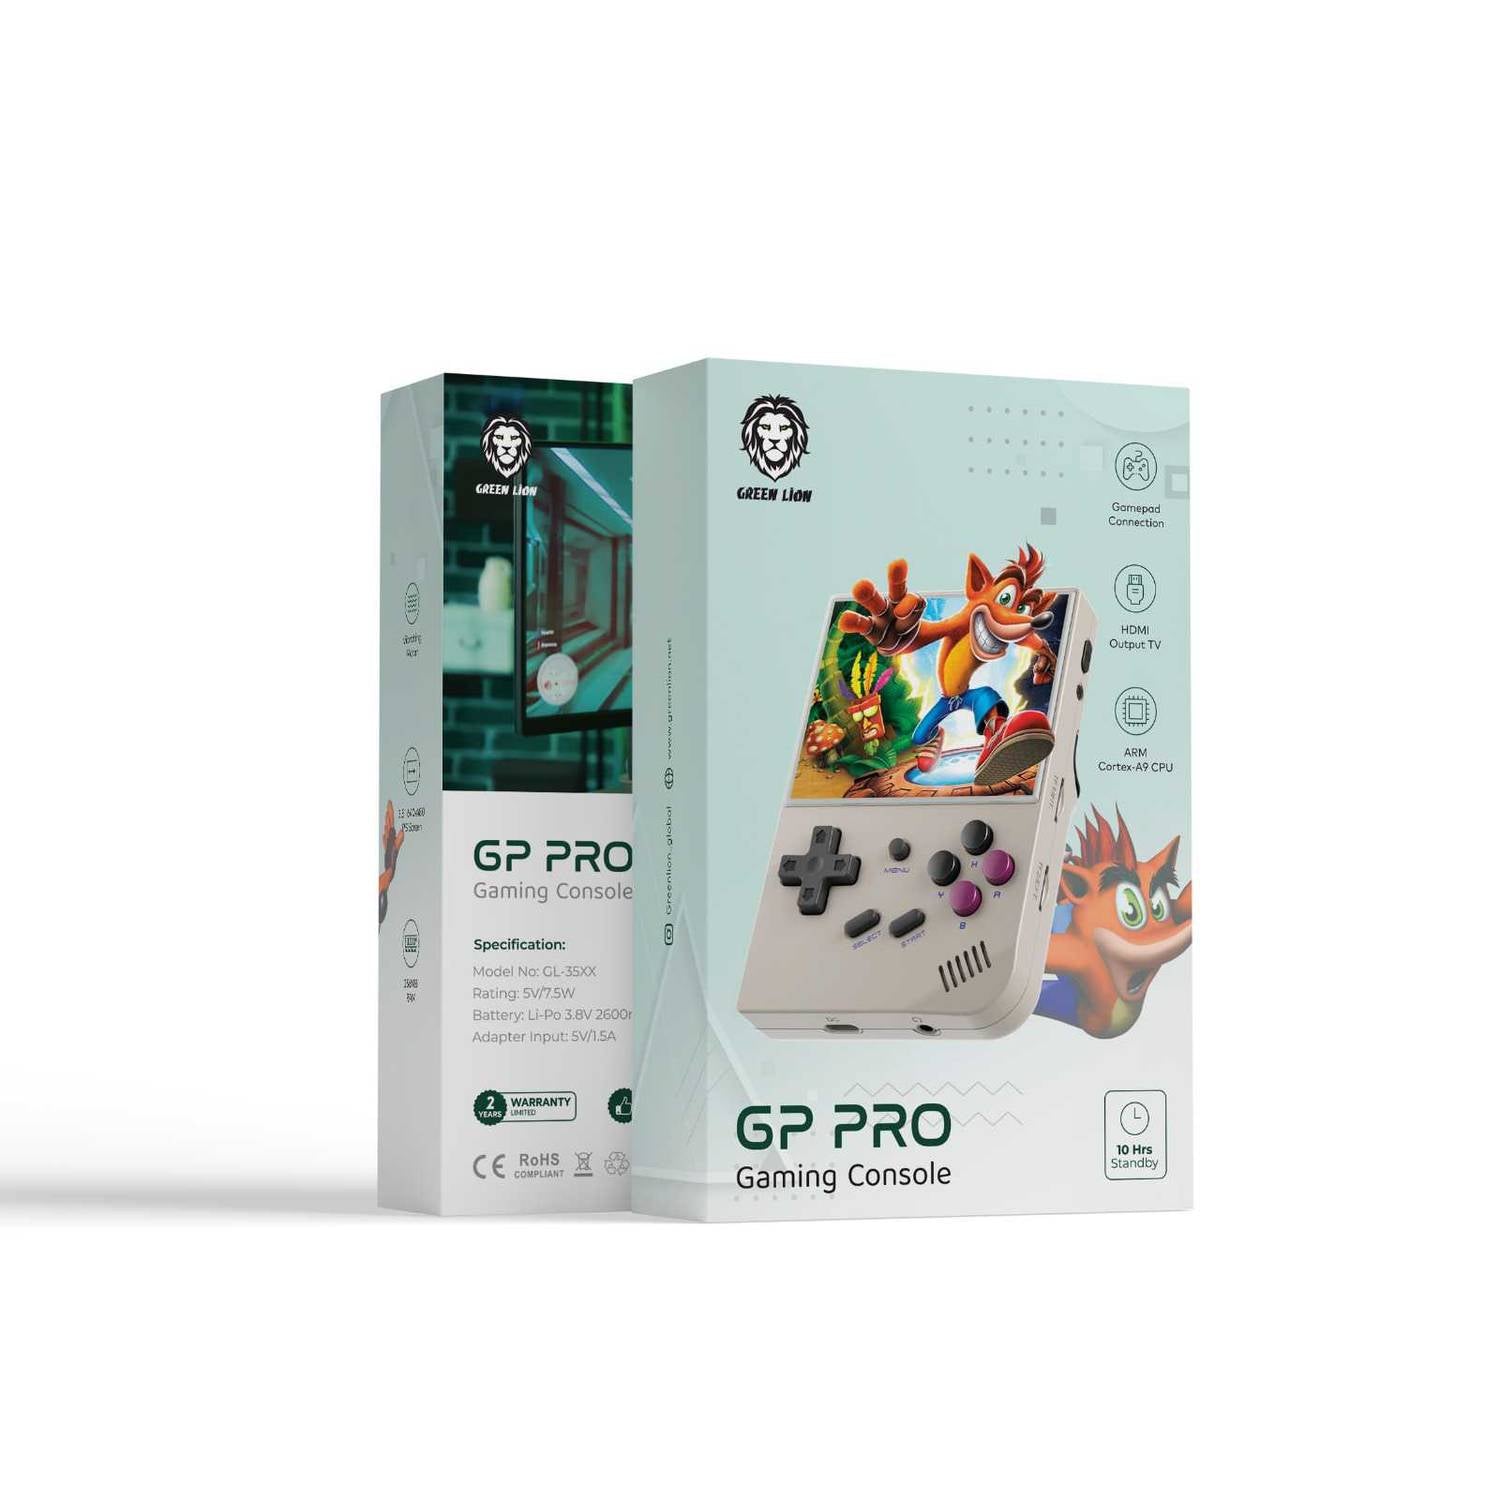 Green Lion GP Pro Gaming Console 64GB 2600mAh